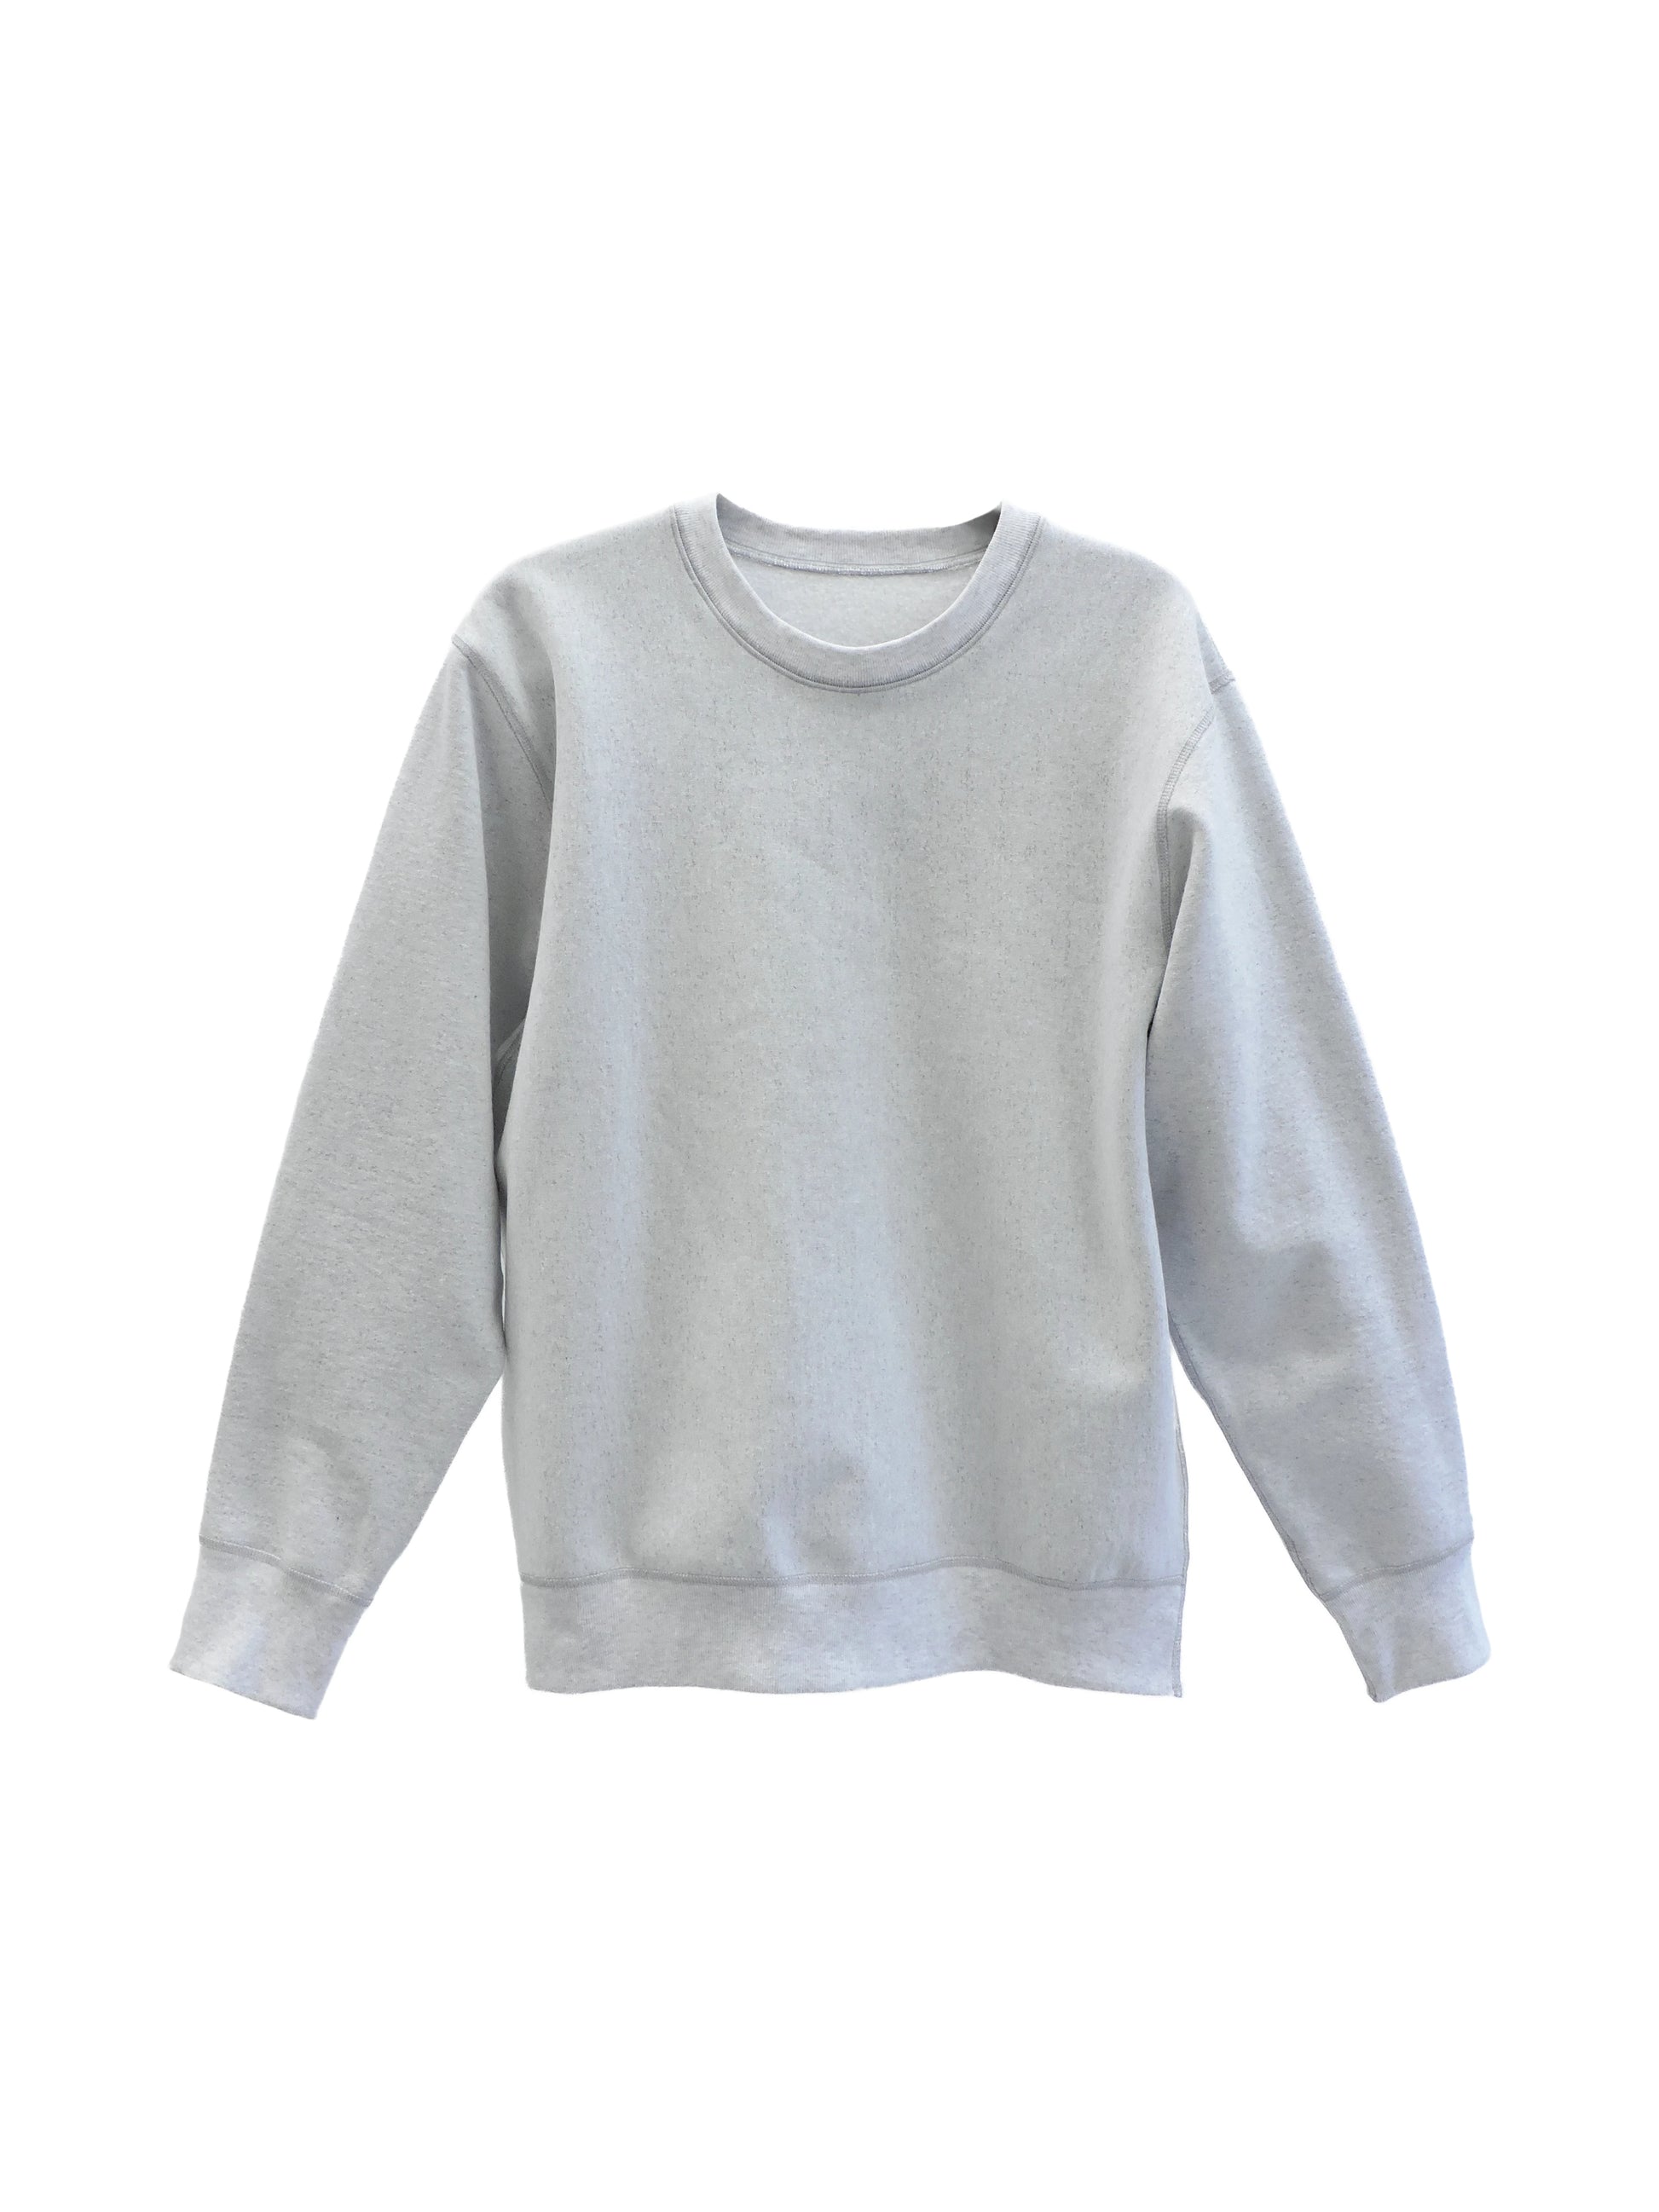 Ice Grey Crewneck Sweater | 450 GSM Organic Cotton | Made in